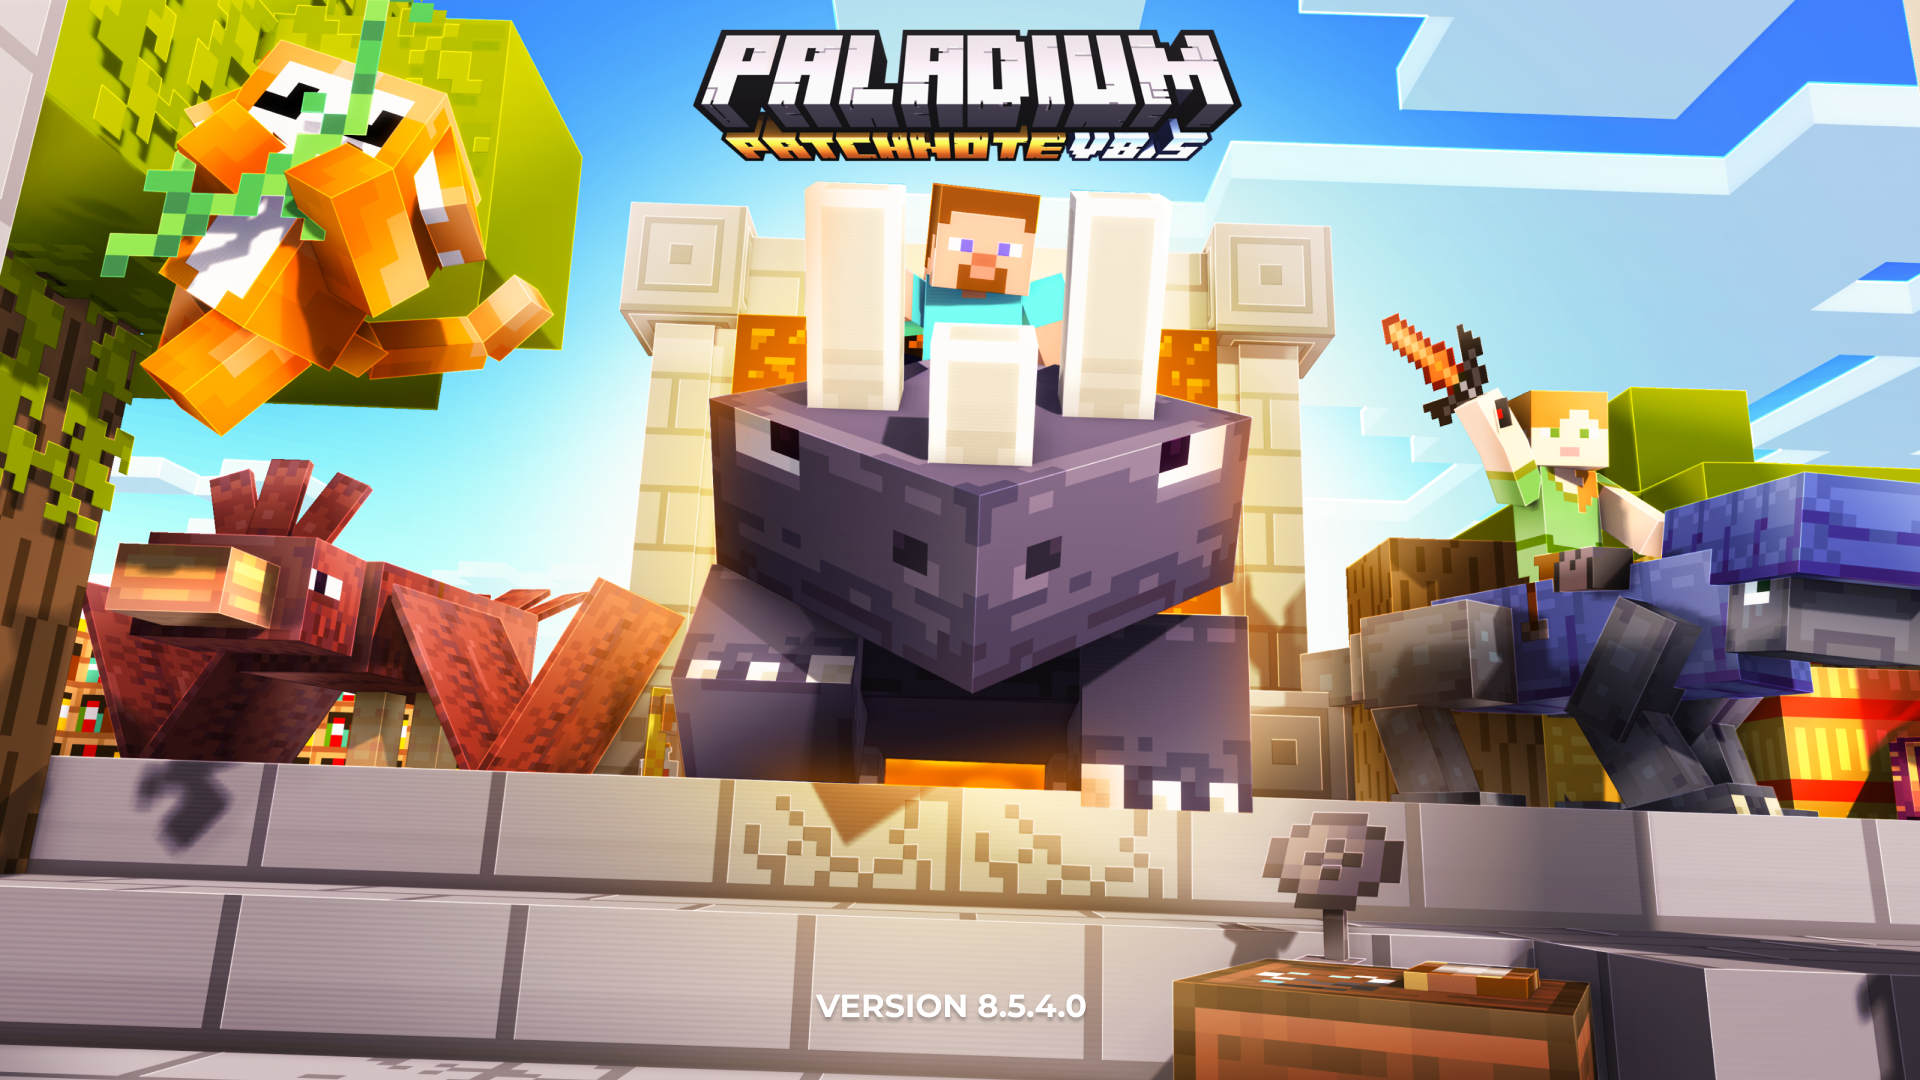 Paladium - PatchNote V8.5.4.0 | 17/02/2022